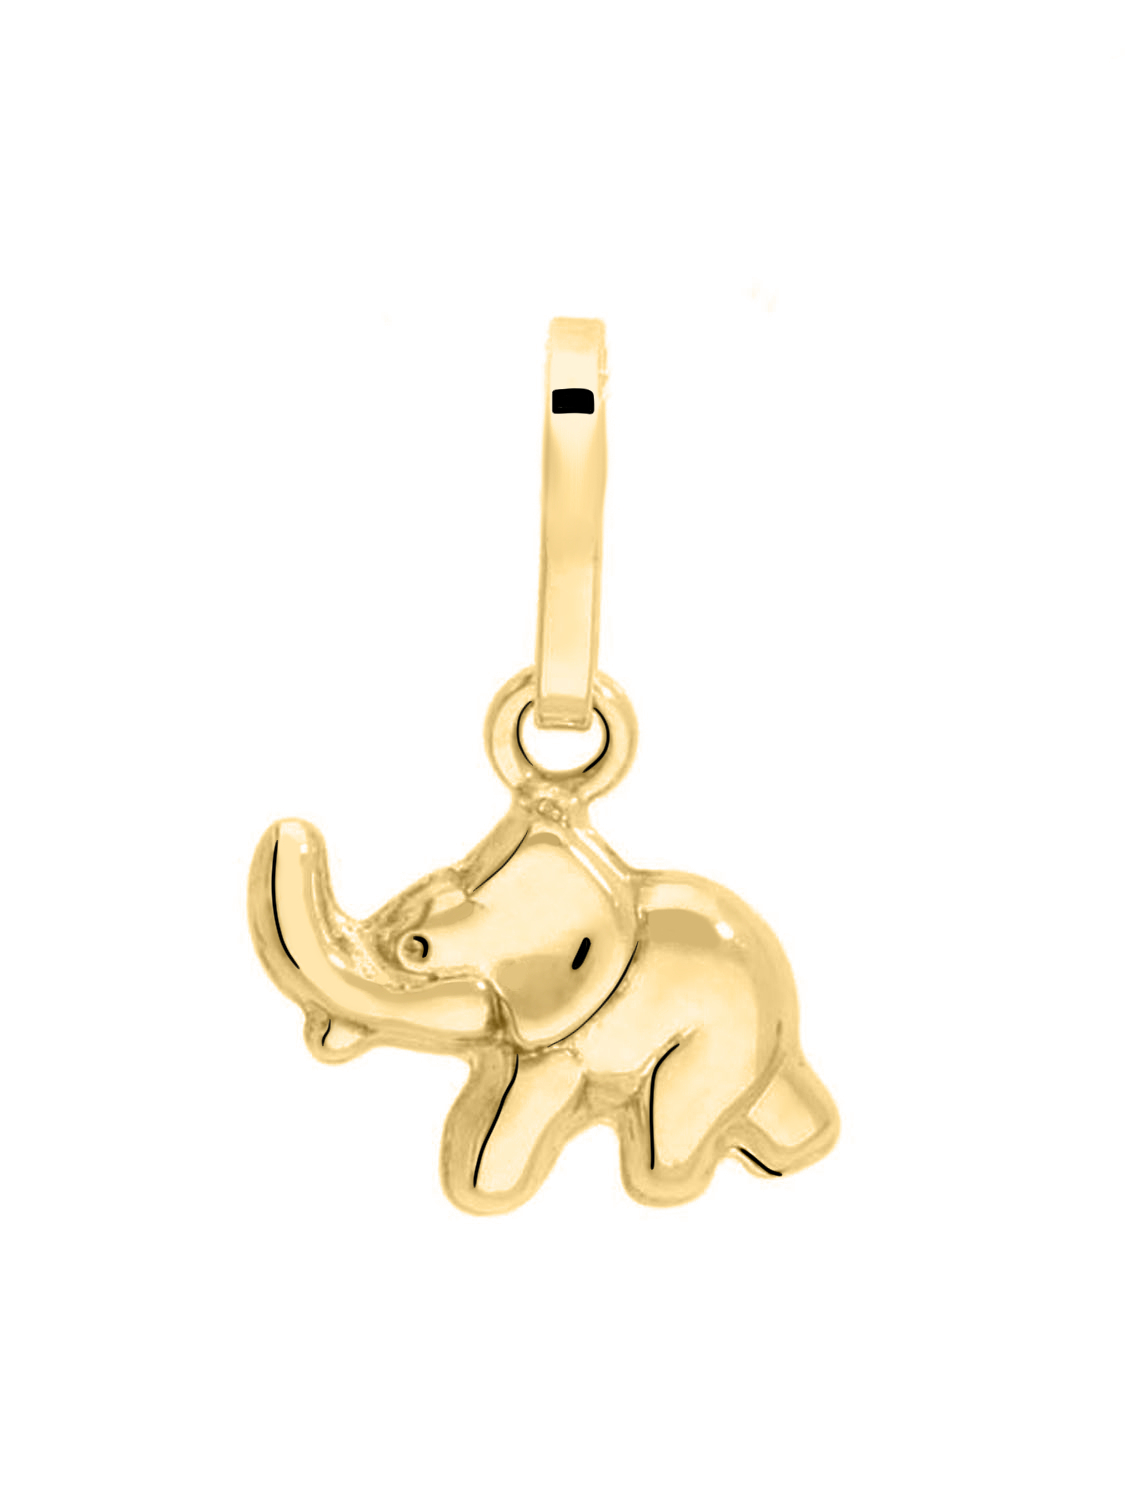 Picotee - Elefant Motivanhänger 585 Gold